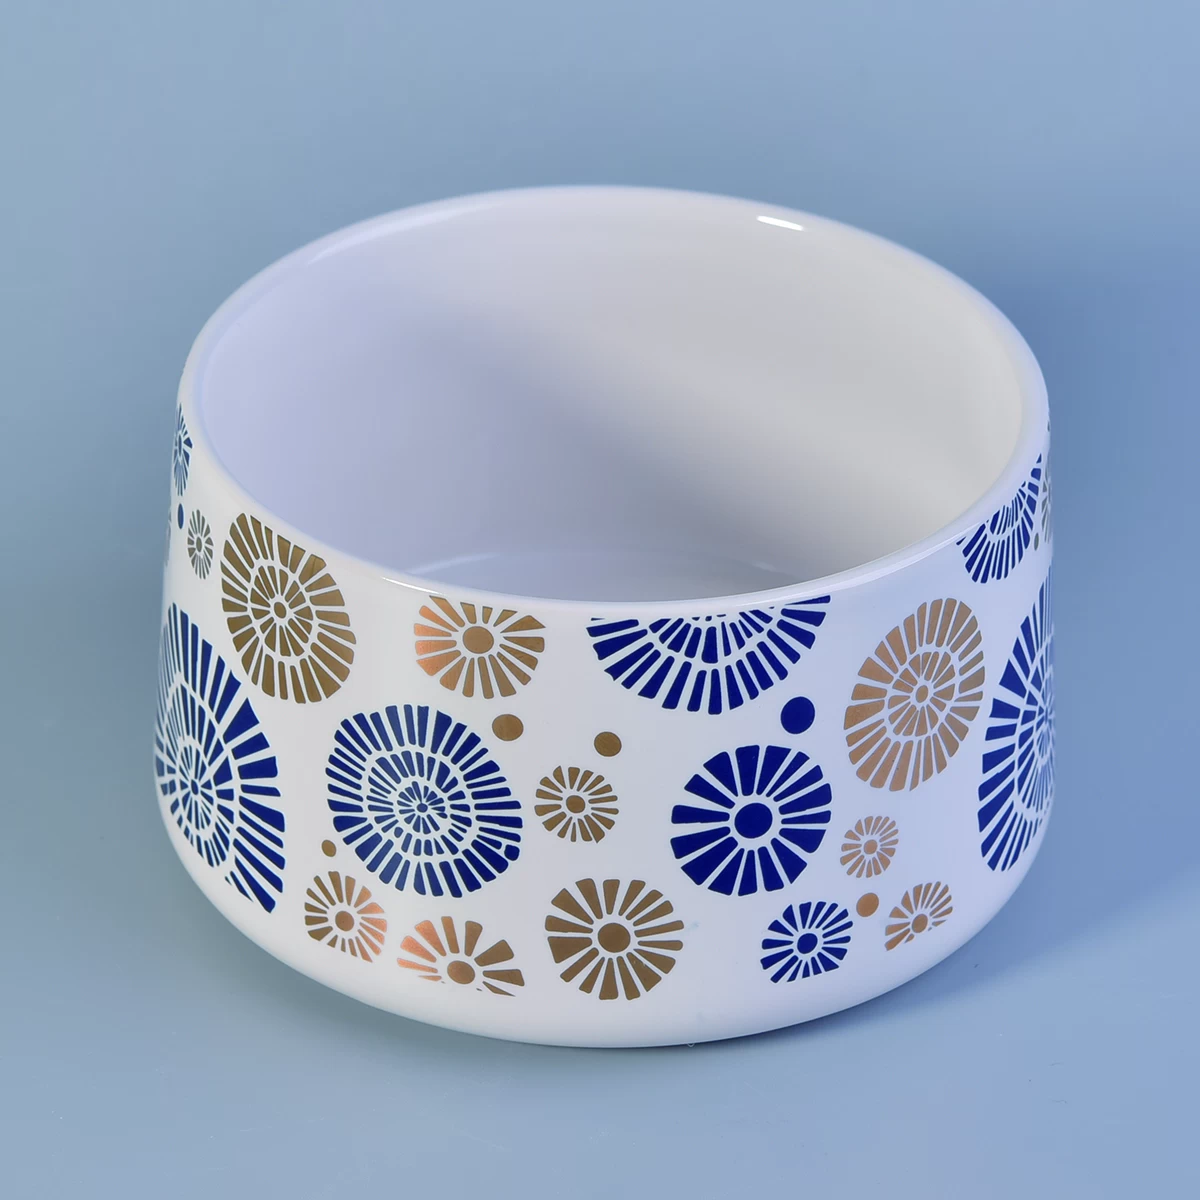 Sunny own design ceramic candle container